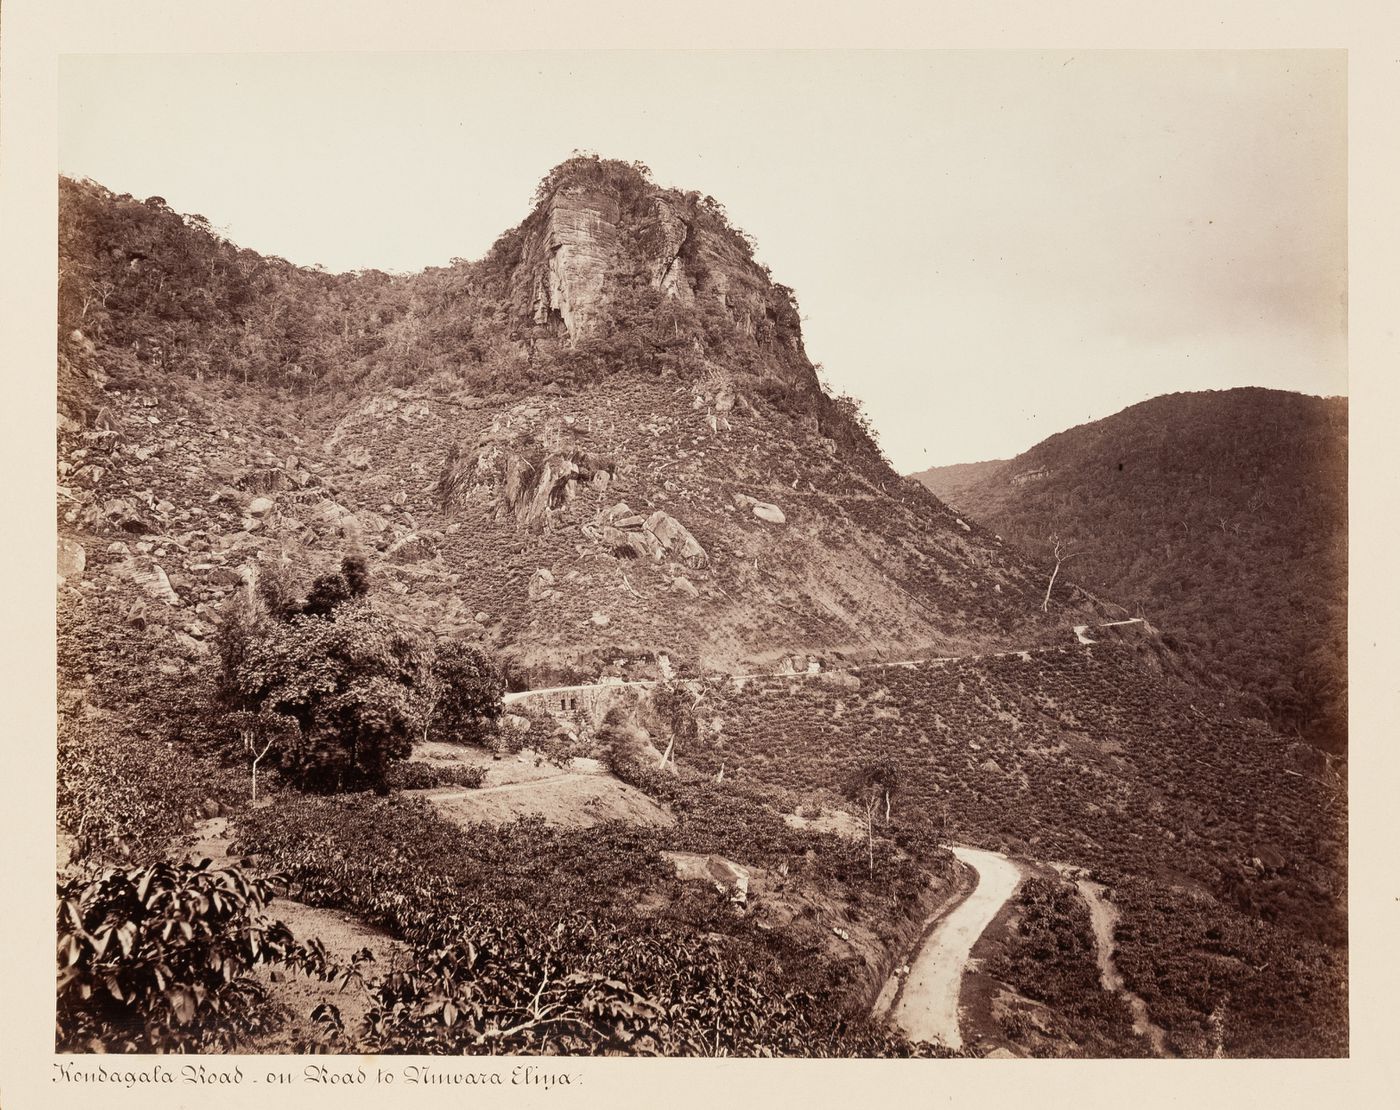 View of Kondgala Road with mountains in the background, near Nuwara Eliya, Ceylon (now Sri Lanka)